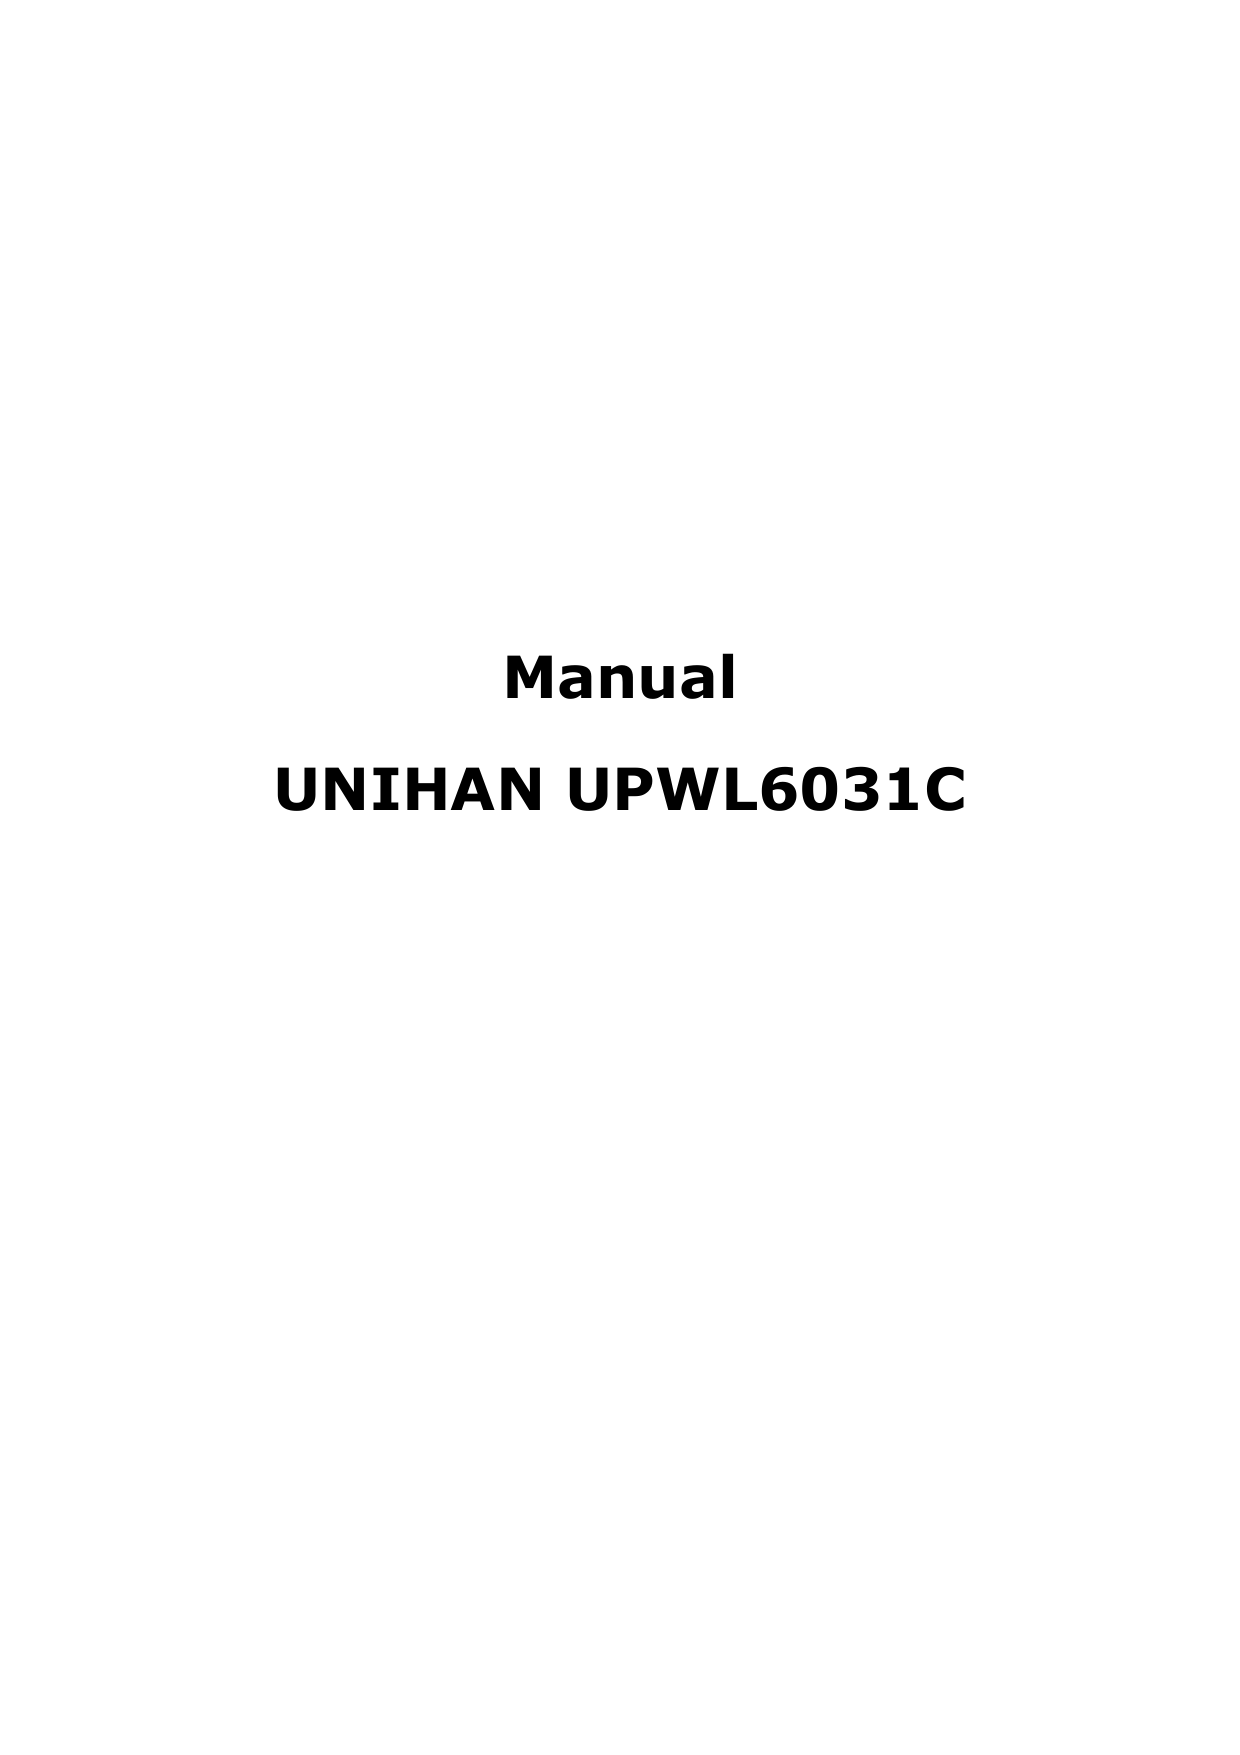       Manual UNIHAN UPWL6031C